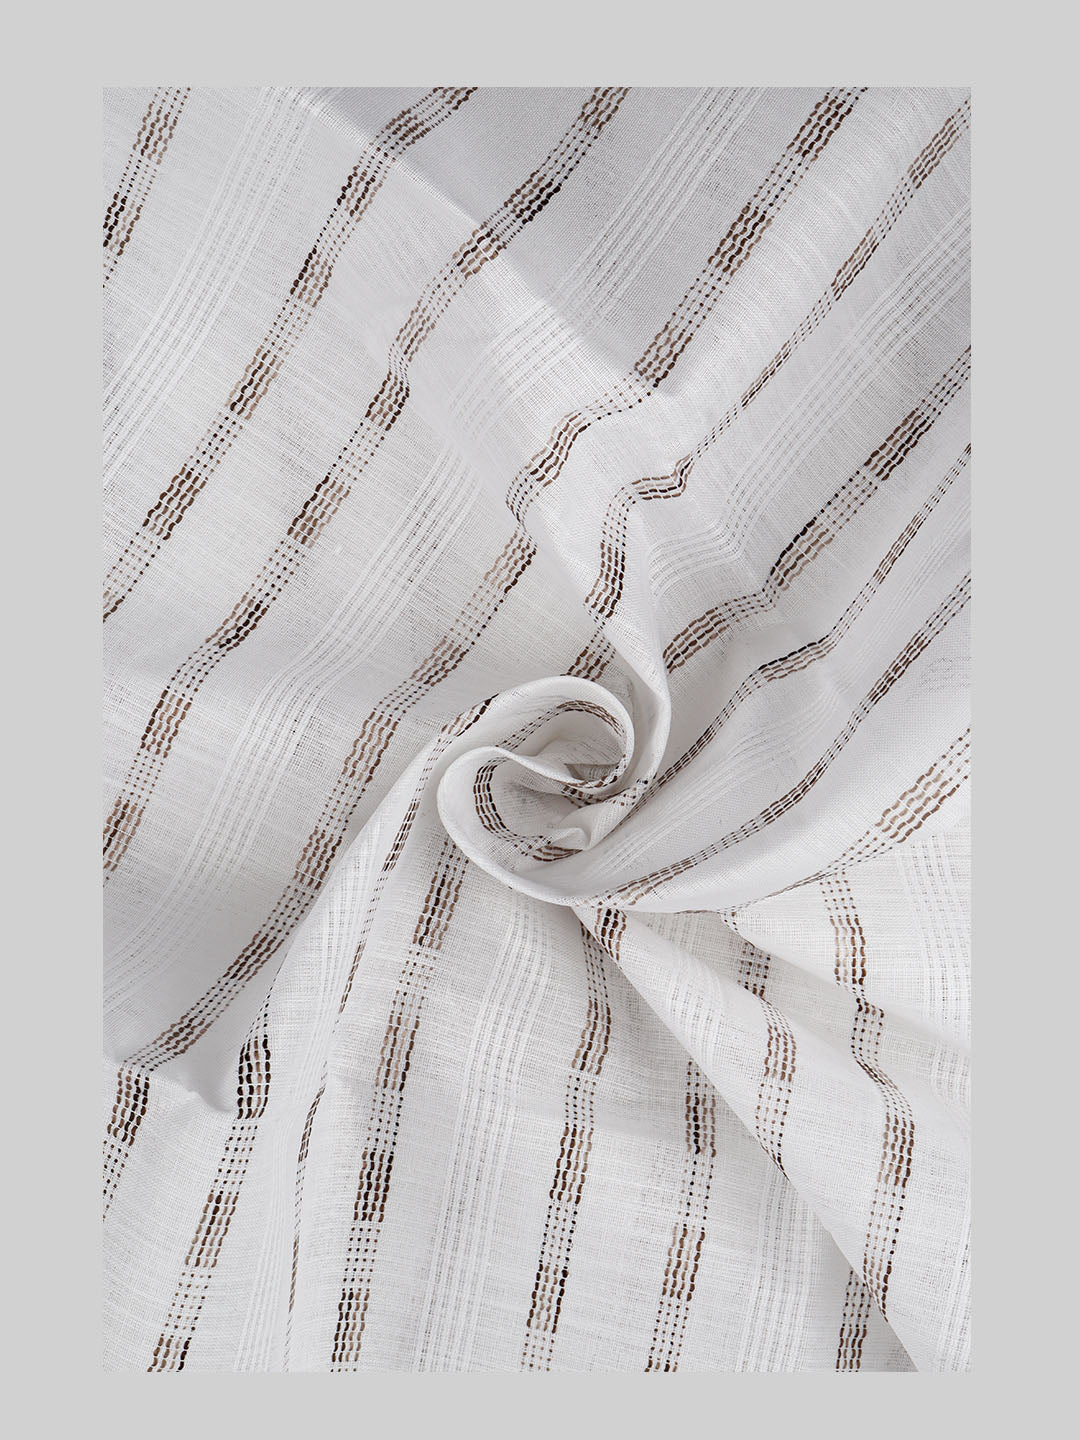 Cotton Blend White & Brown Striped Shirt Fabric Hi-Tech